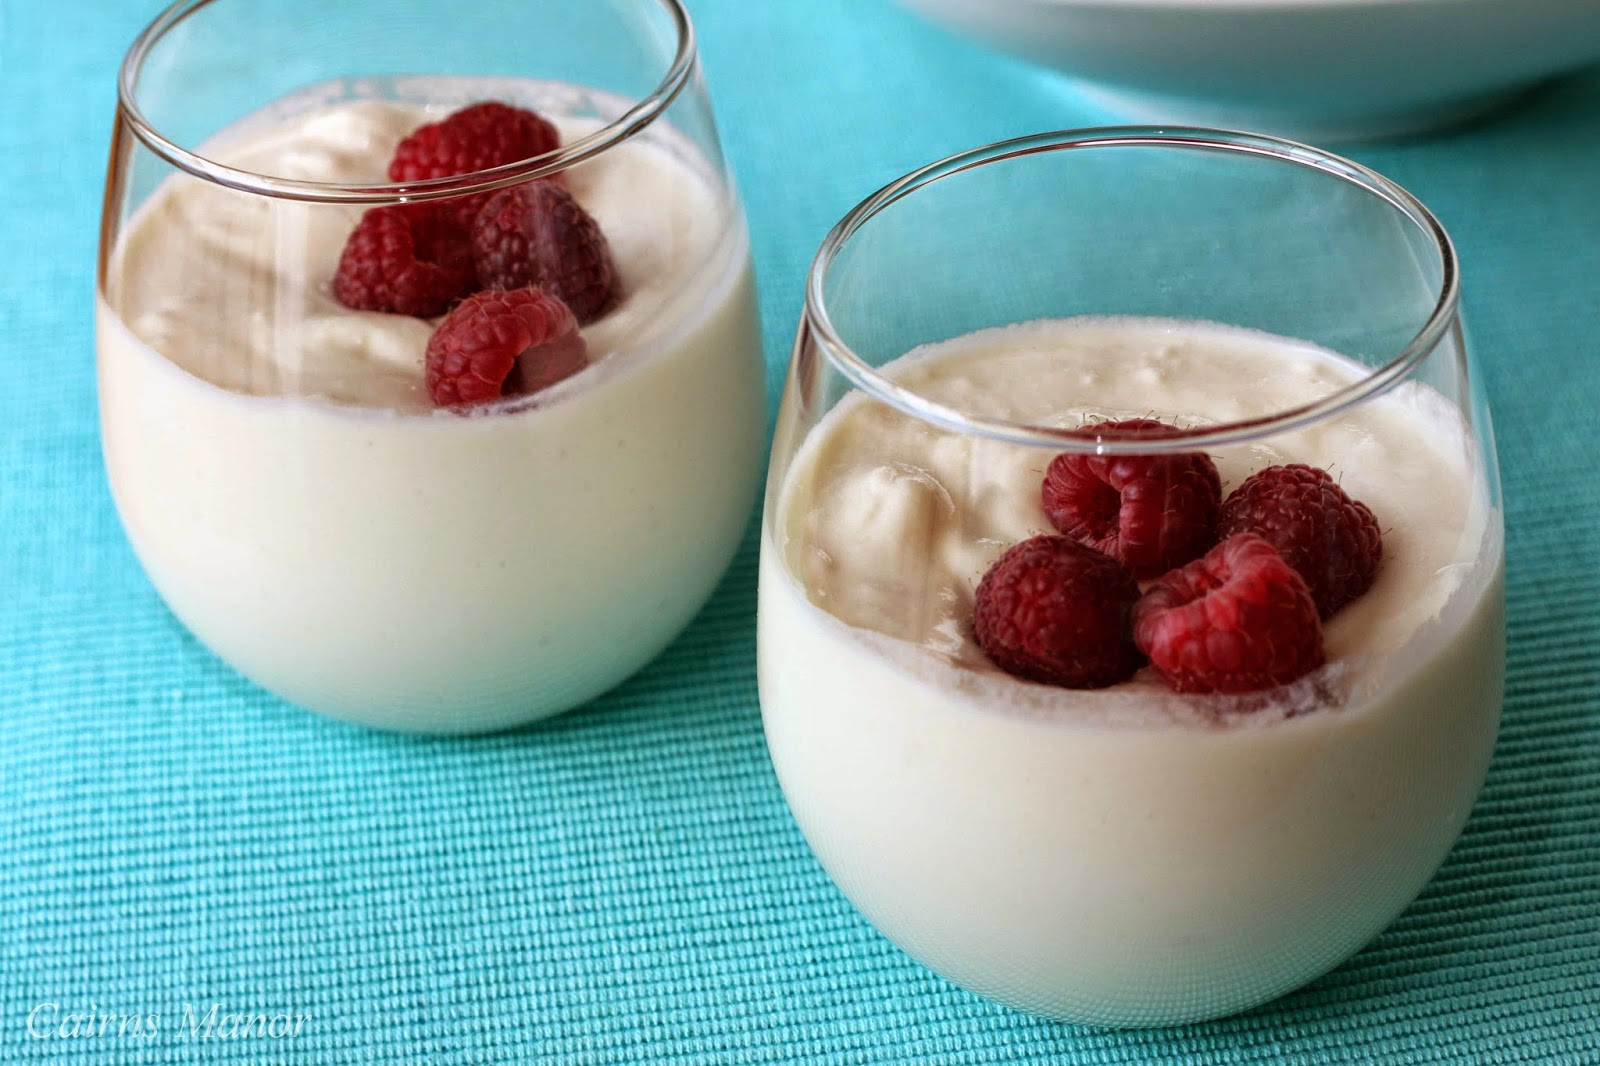 Giordanosfood: Delicious yogurt mousse.